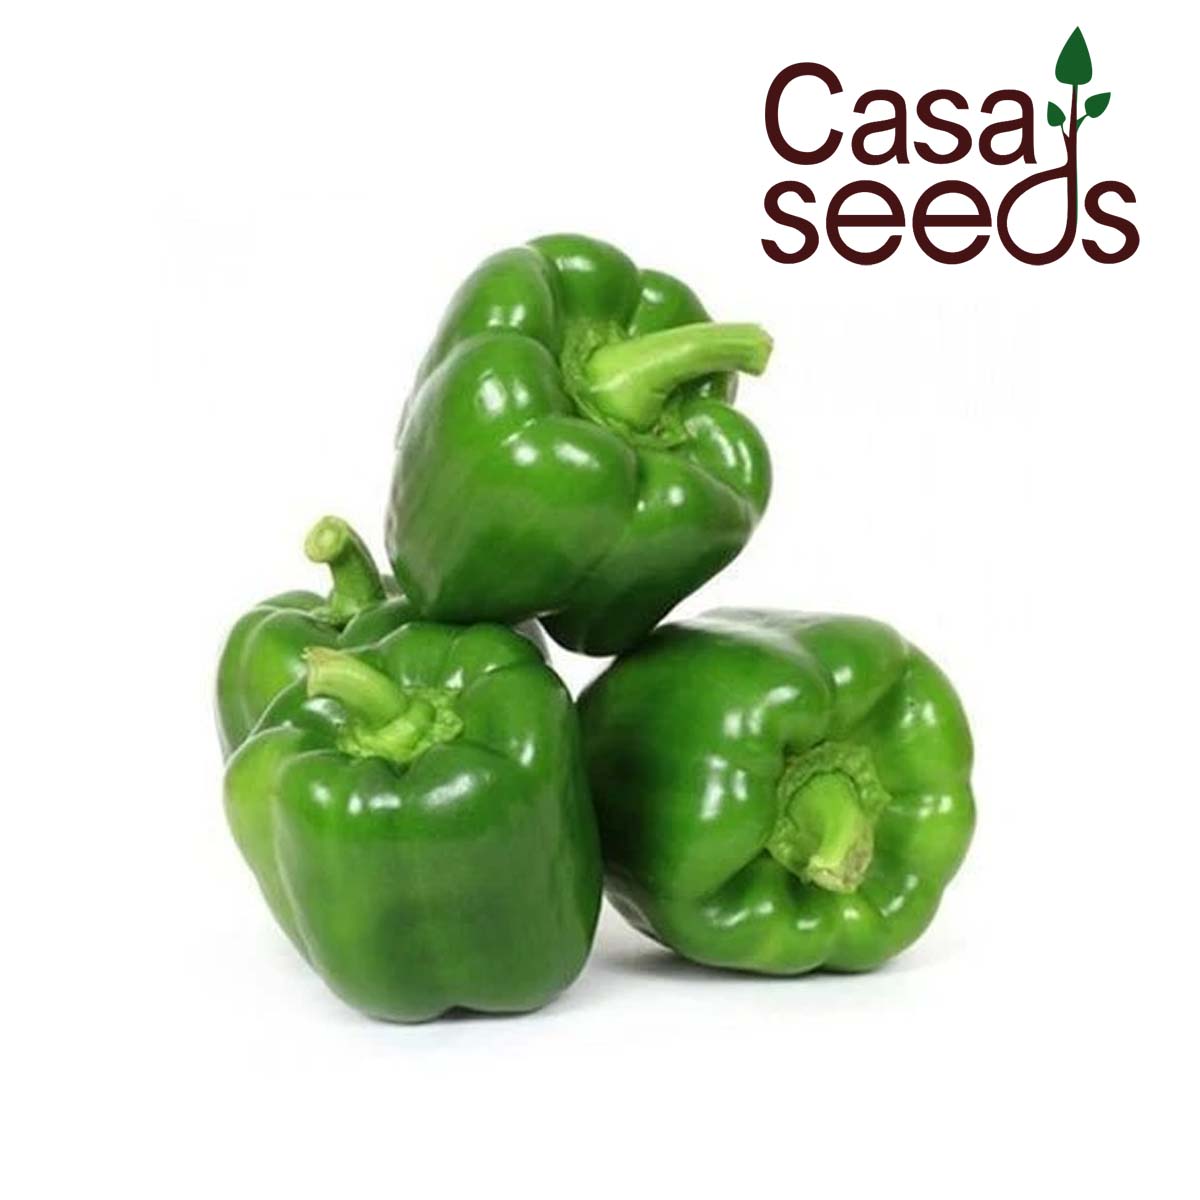 Capsicum Green- 30 Seeds